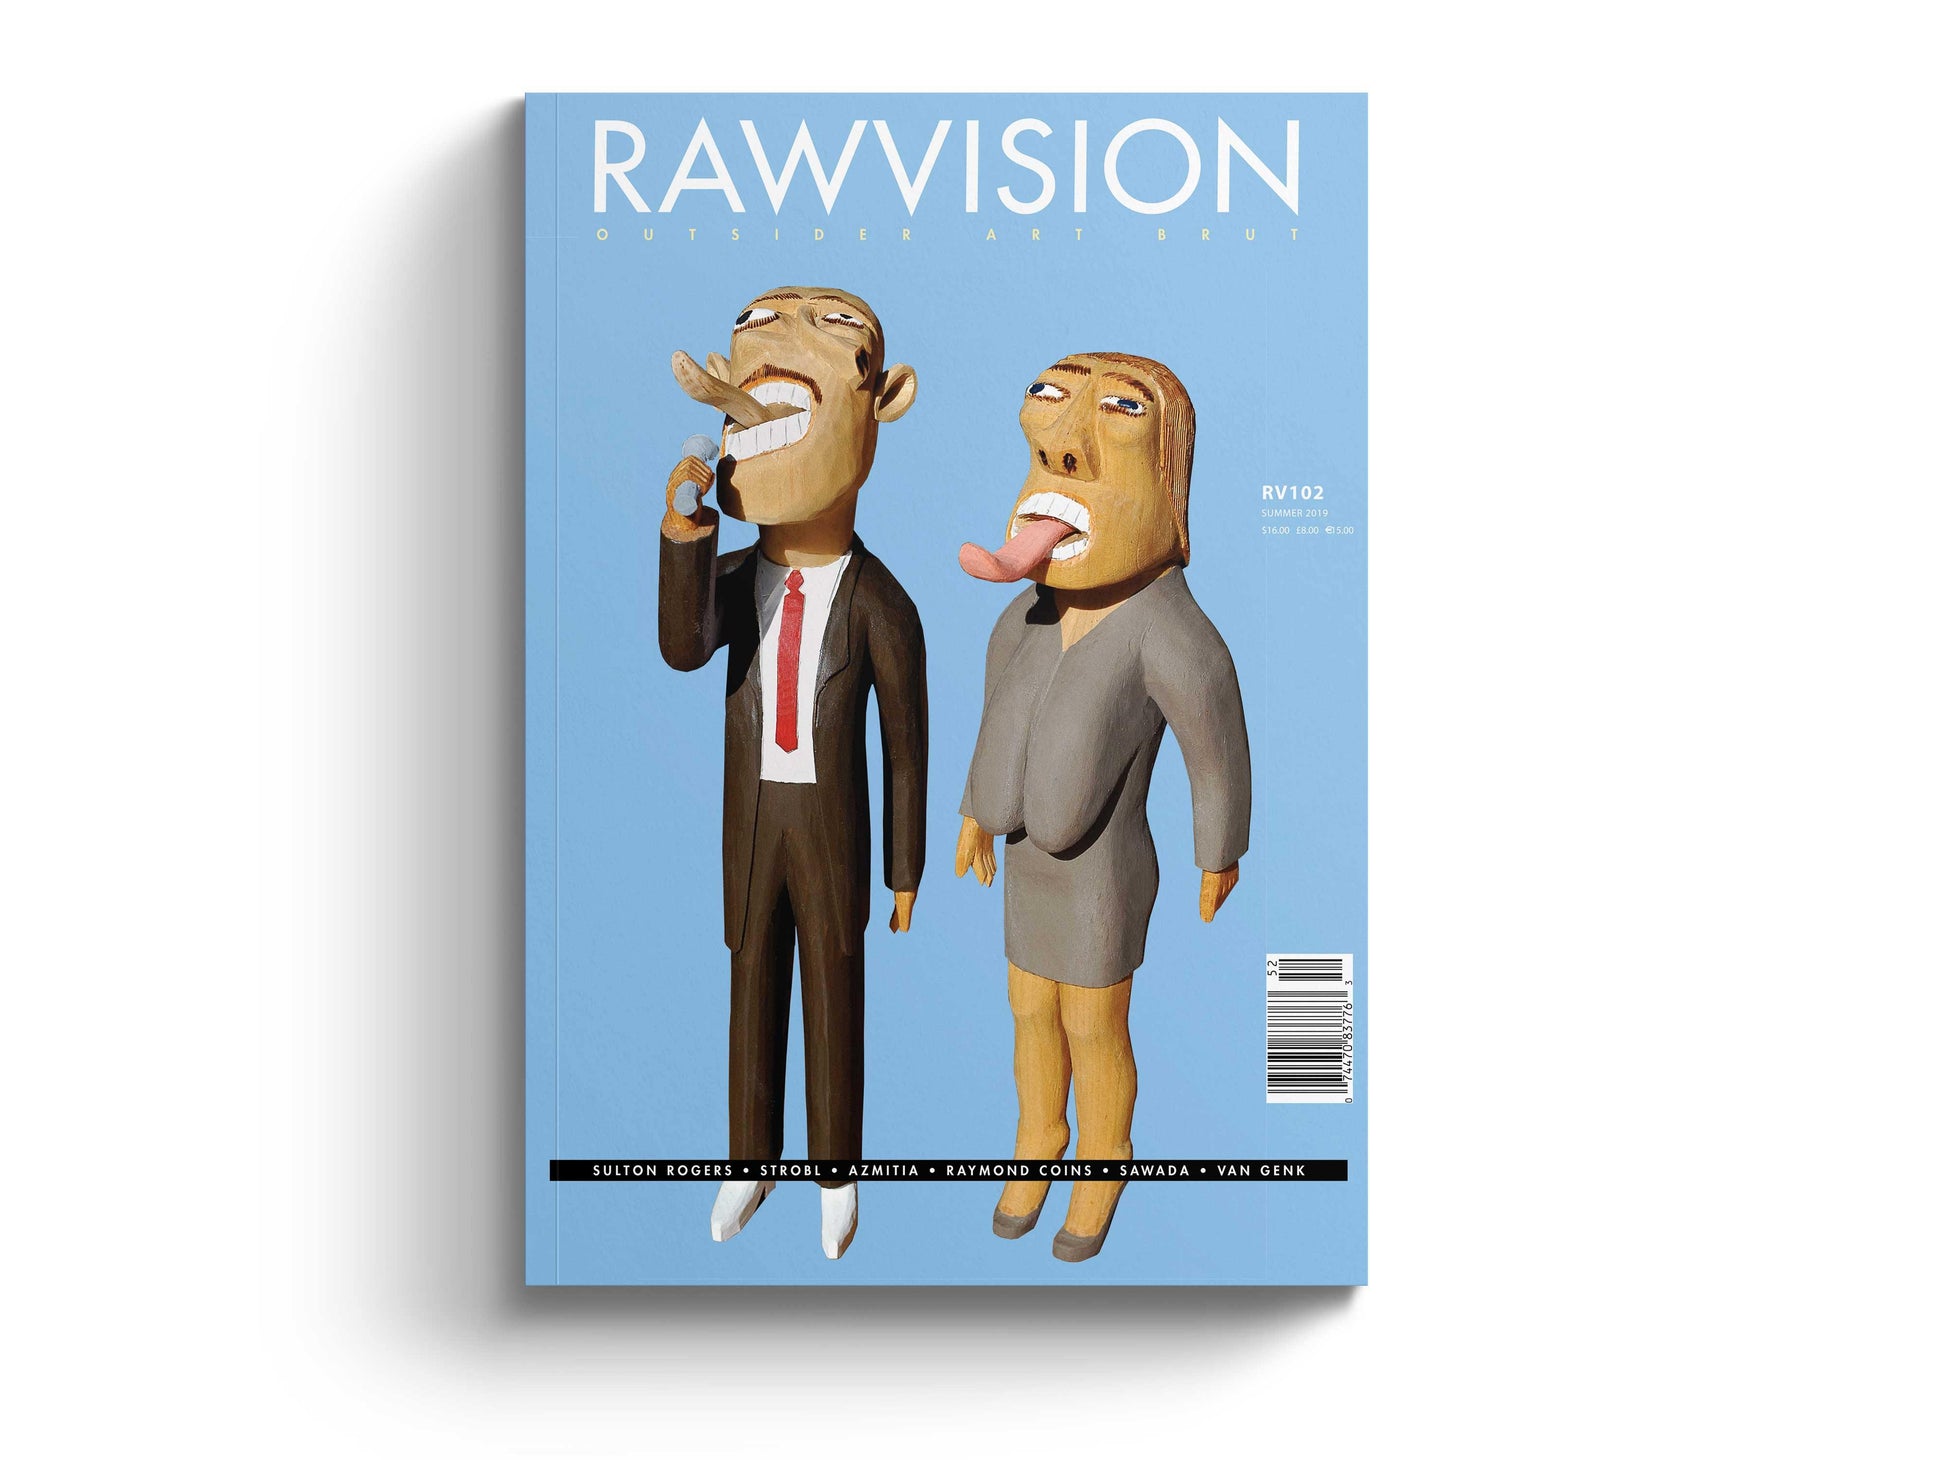 Raw Vision Magazine Issue #102